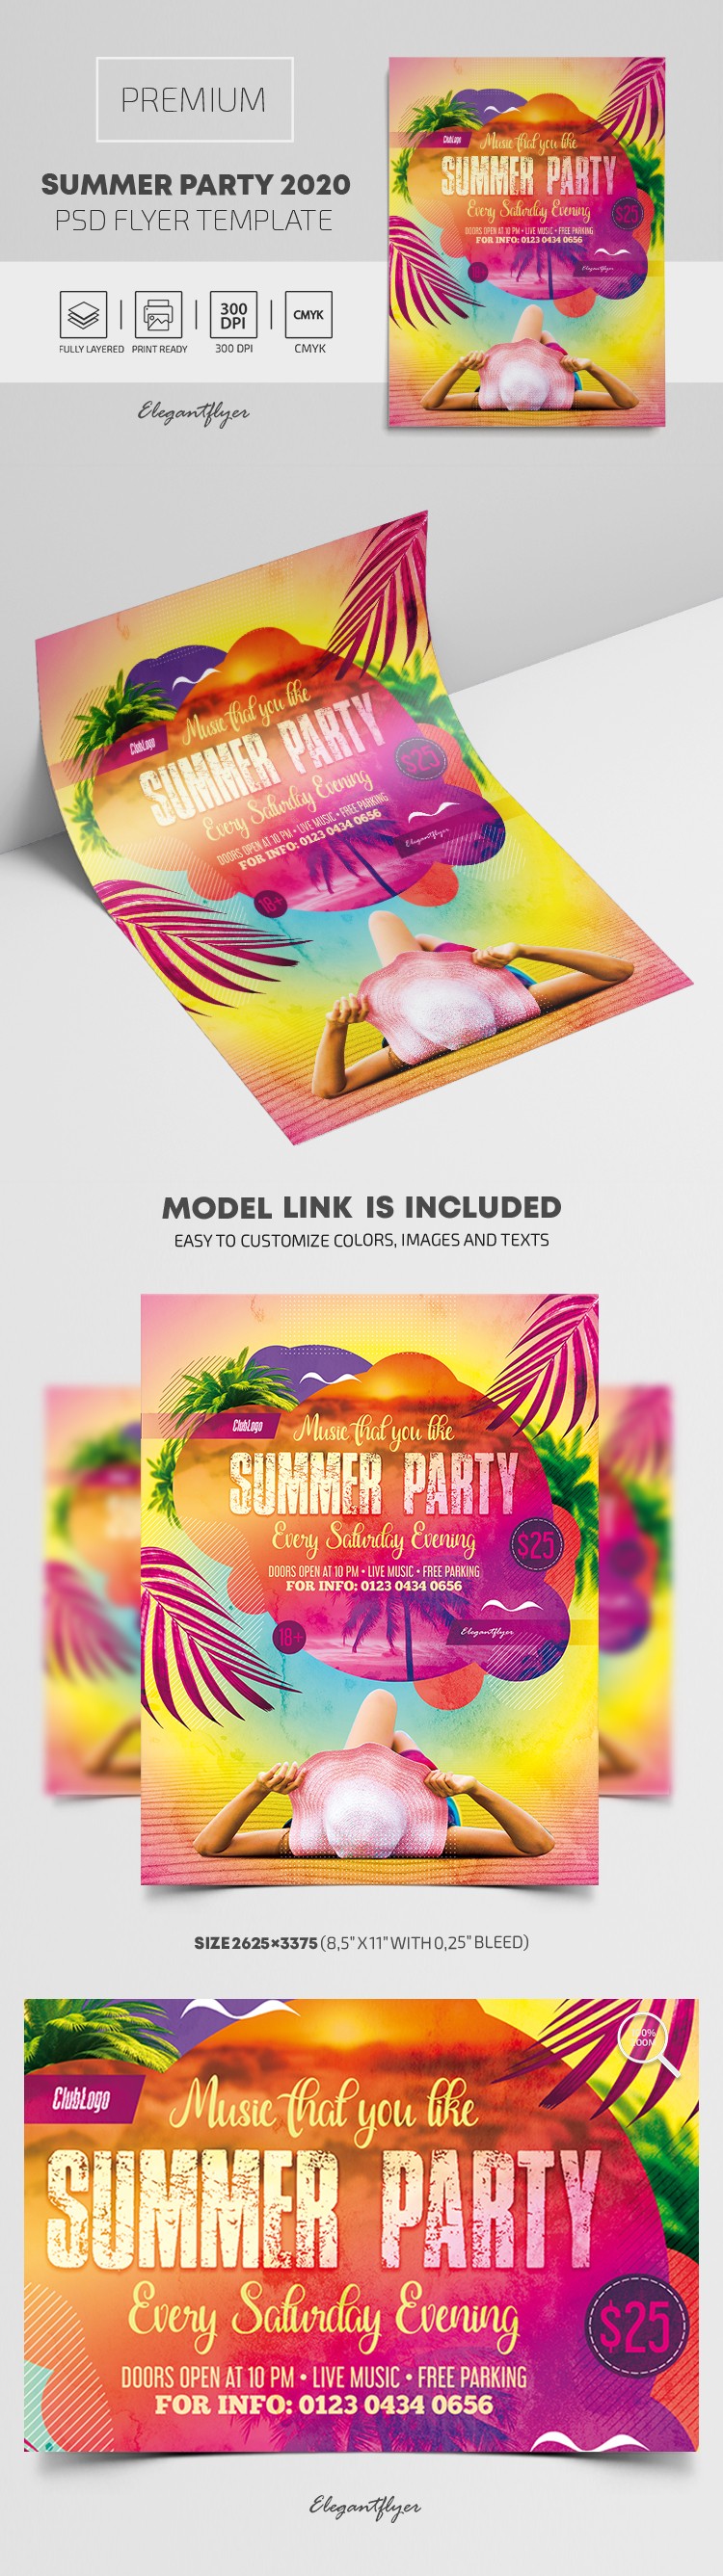 Summer Party 2020 Flyer by ElegantFlyer